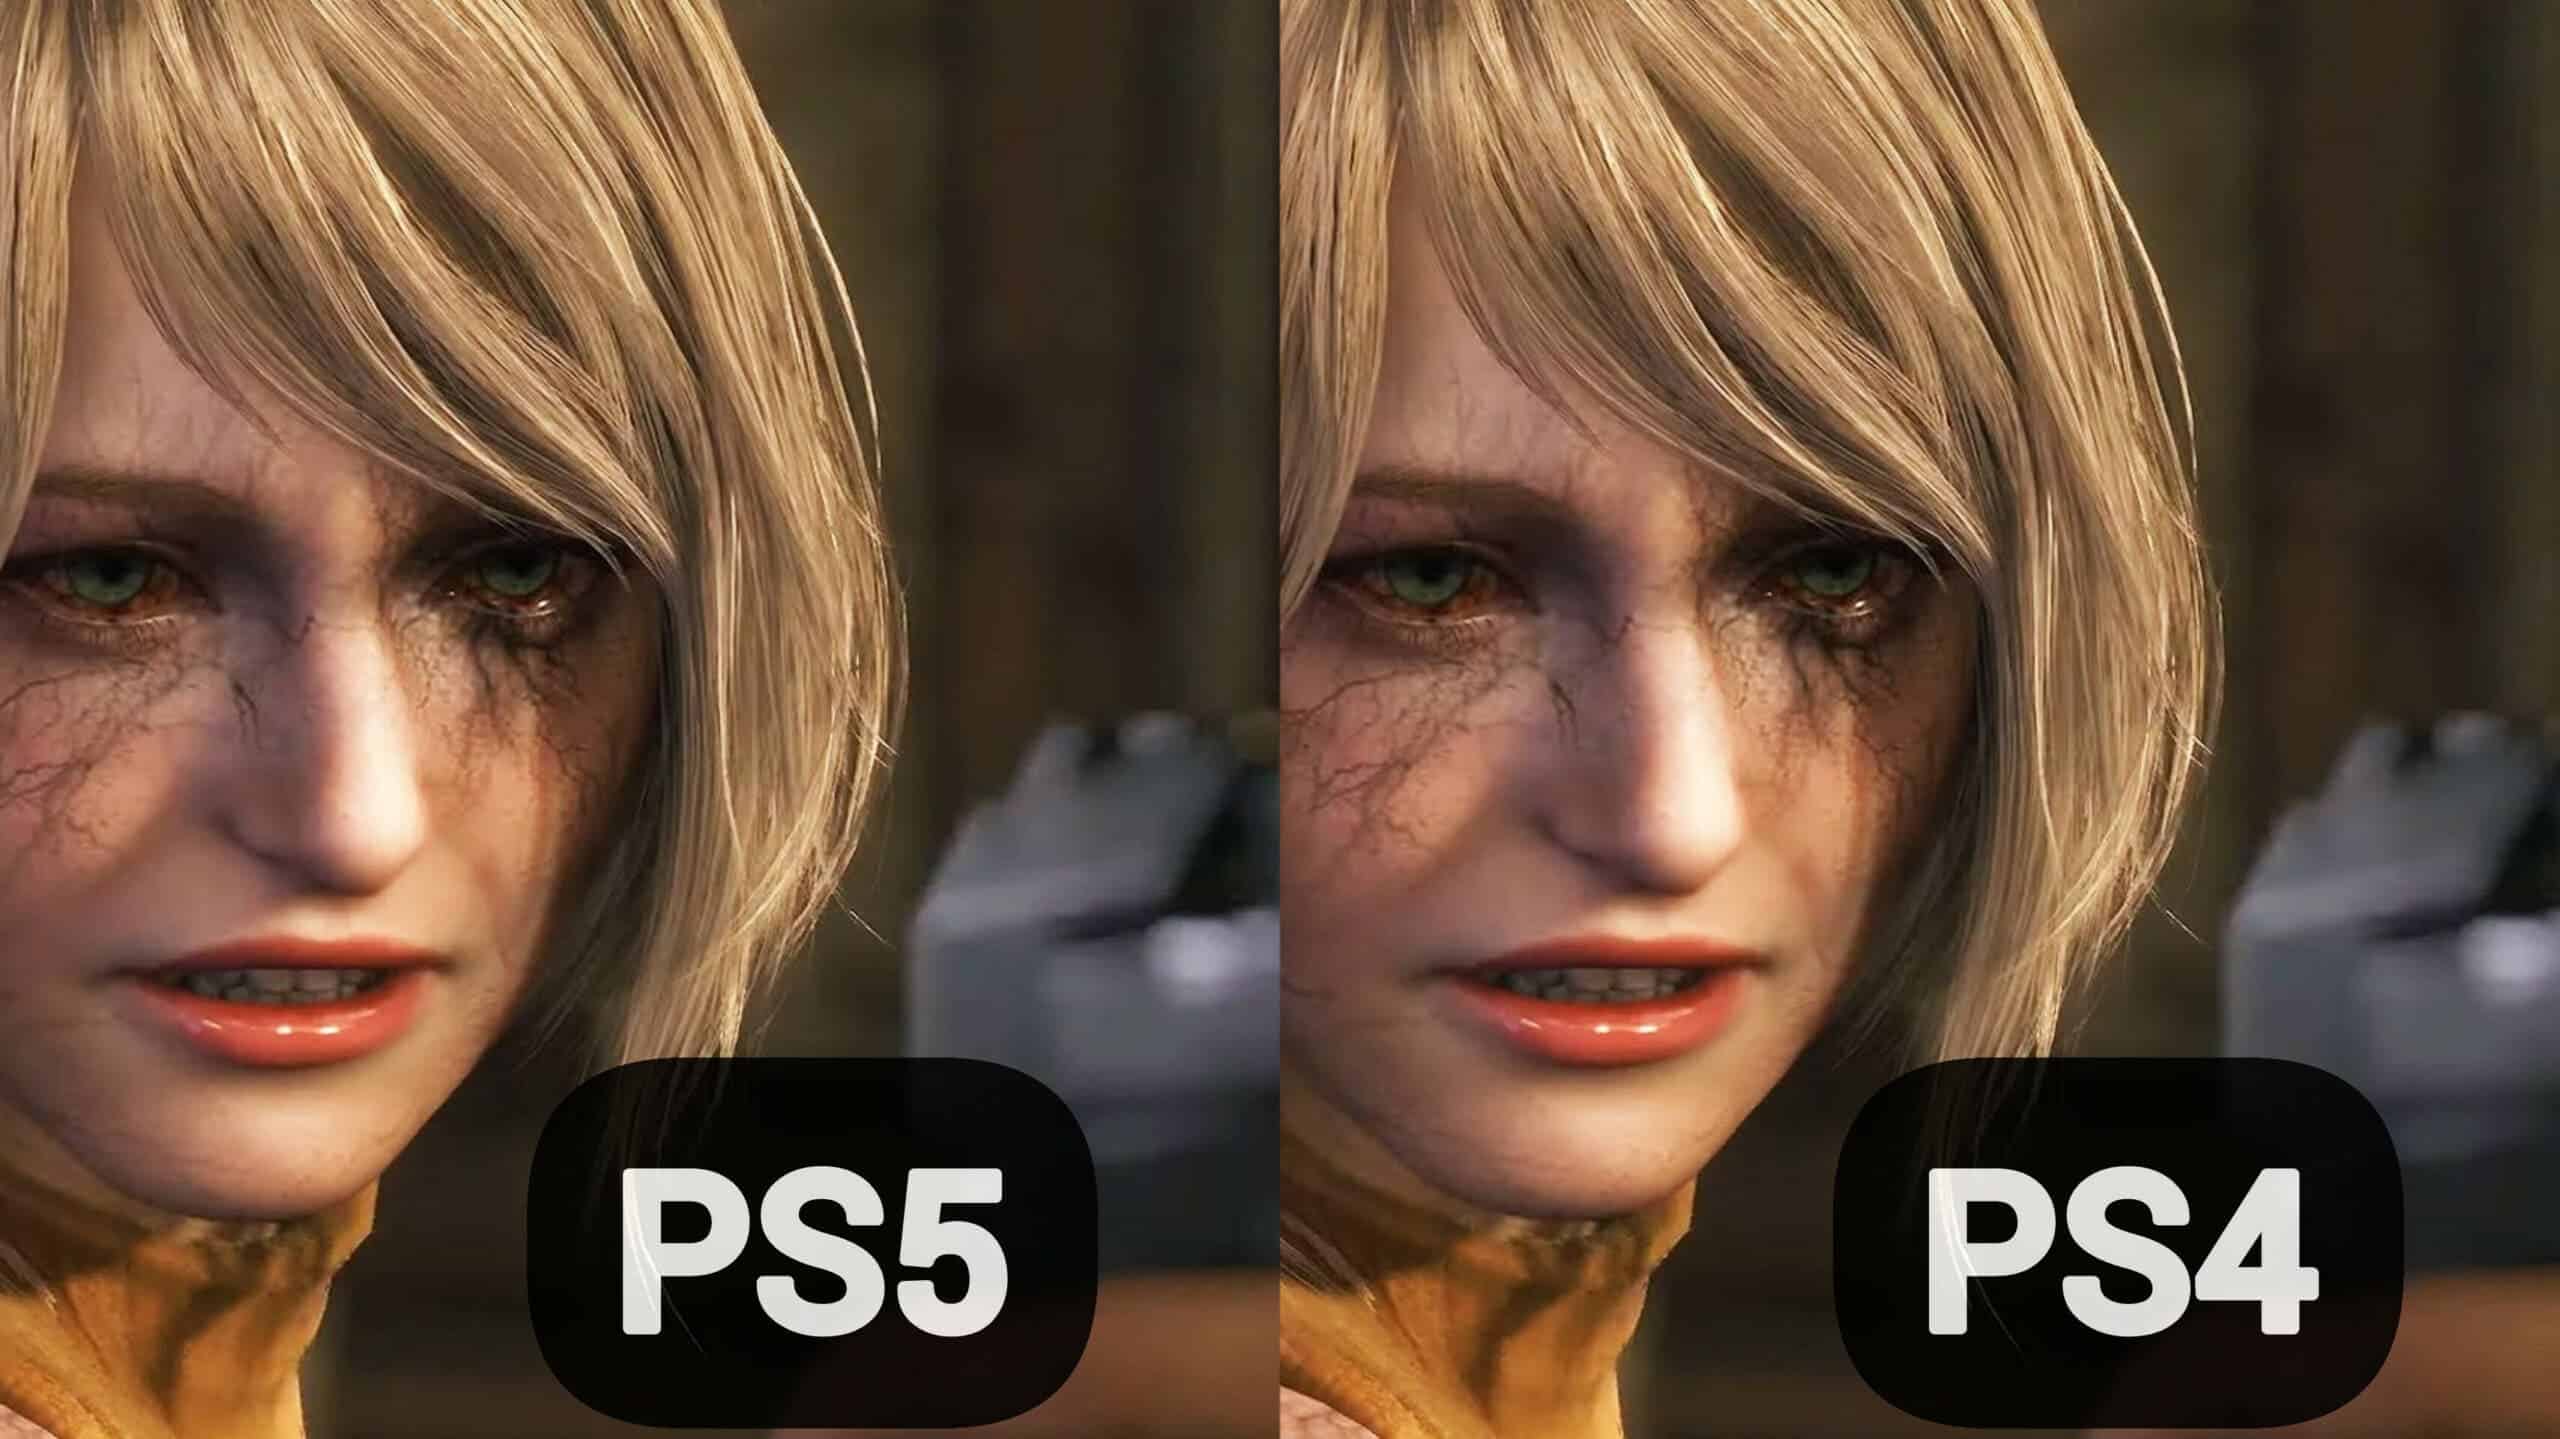 Resident Evil HD Remaster PS4 30fps vs PC 60fps Comparison (video)